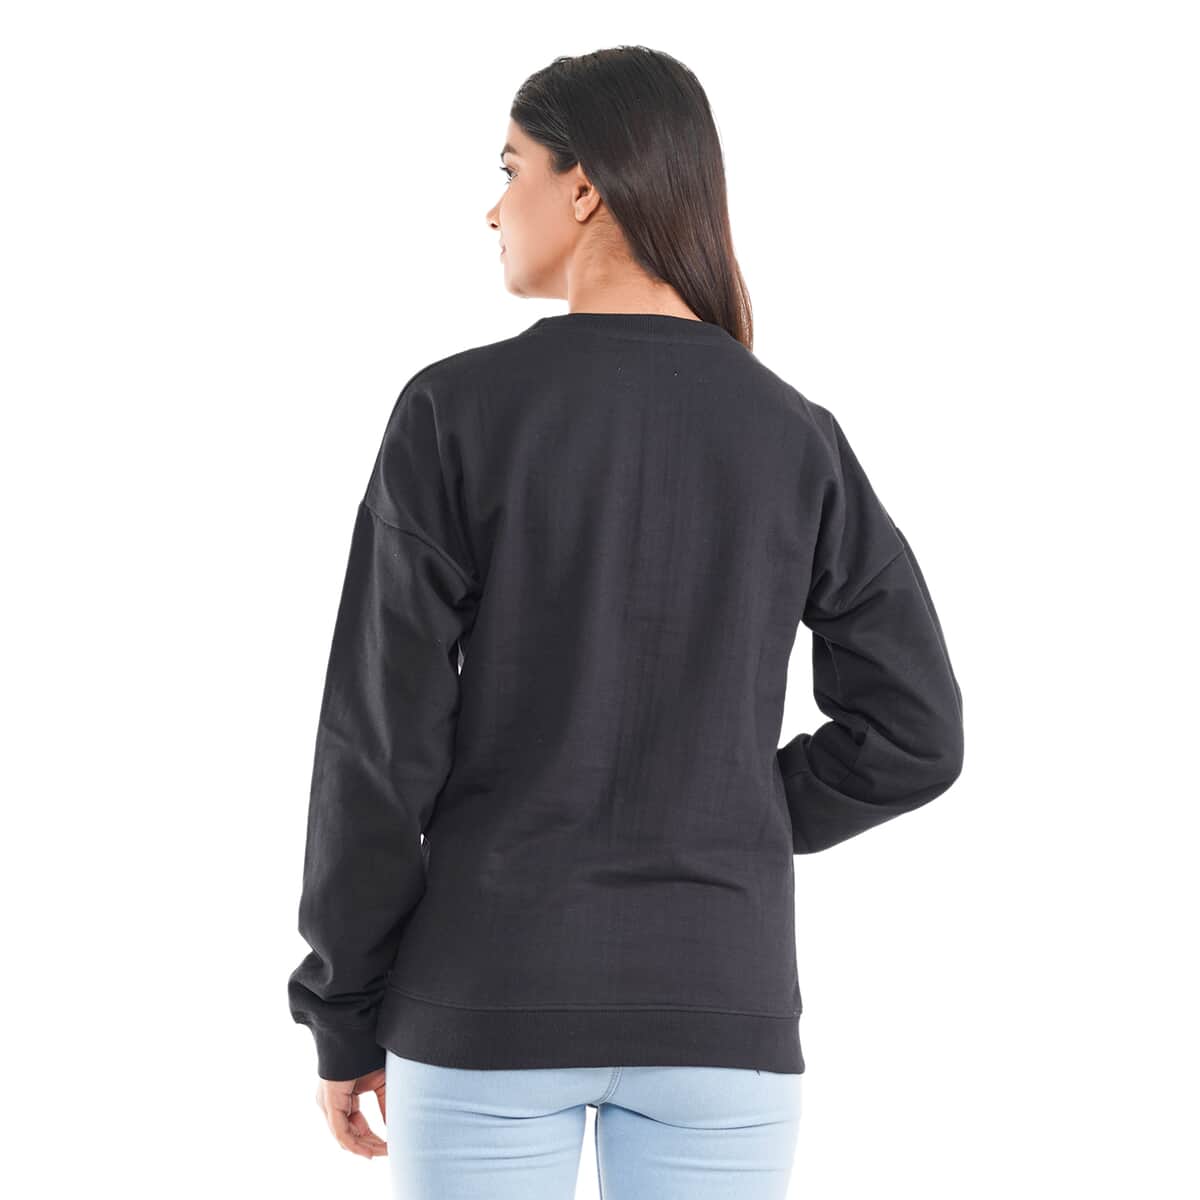 Tamsy Black 100% Cotton Fleece Knit Sweatshirt - L image number 1